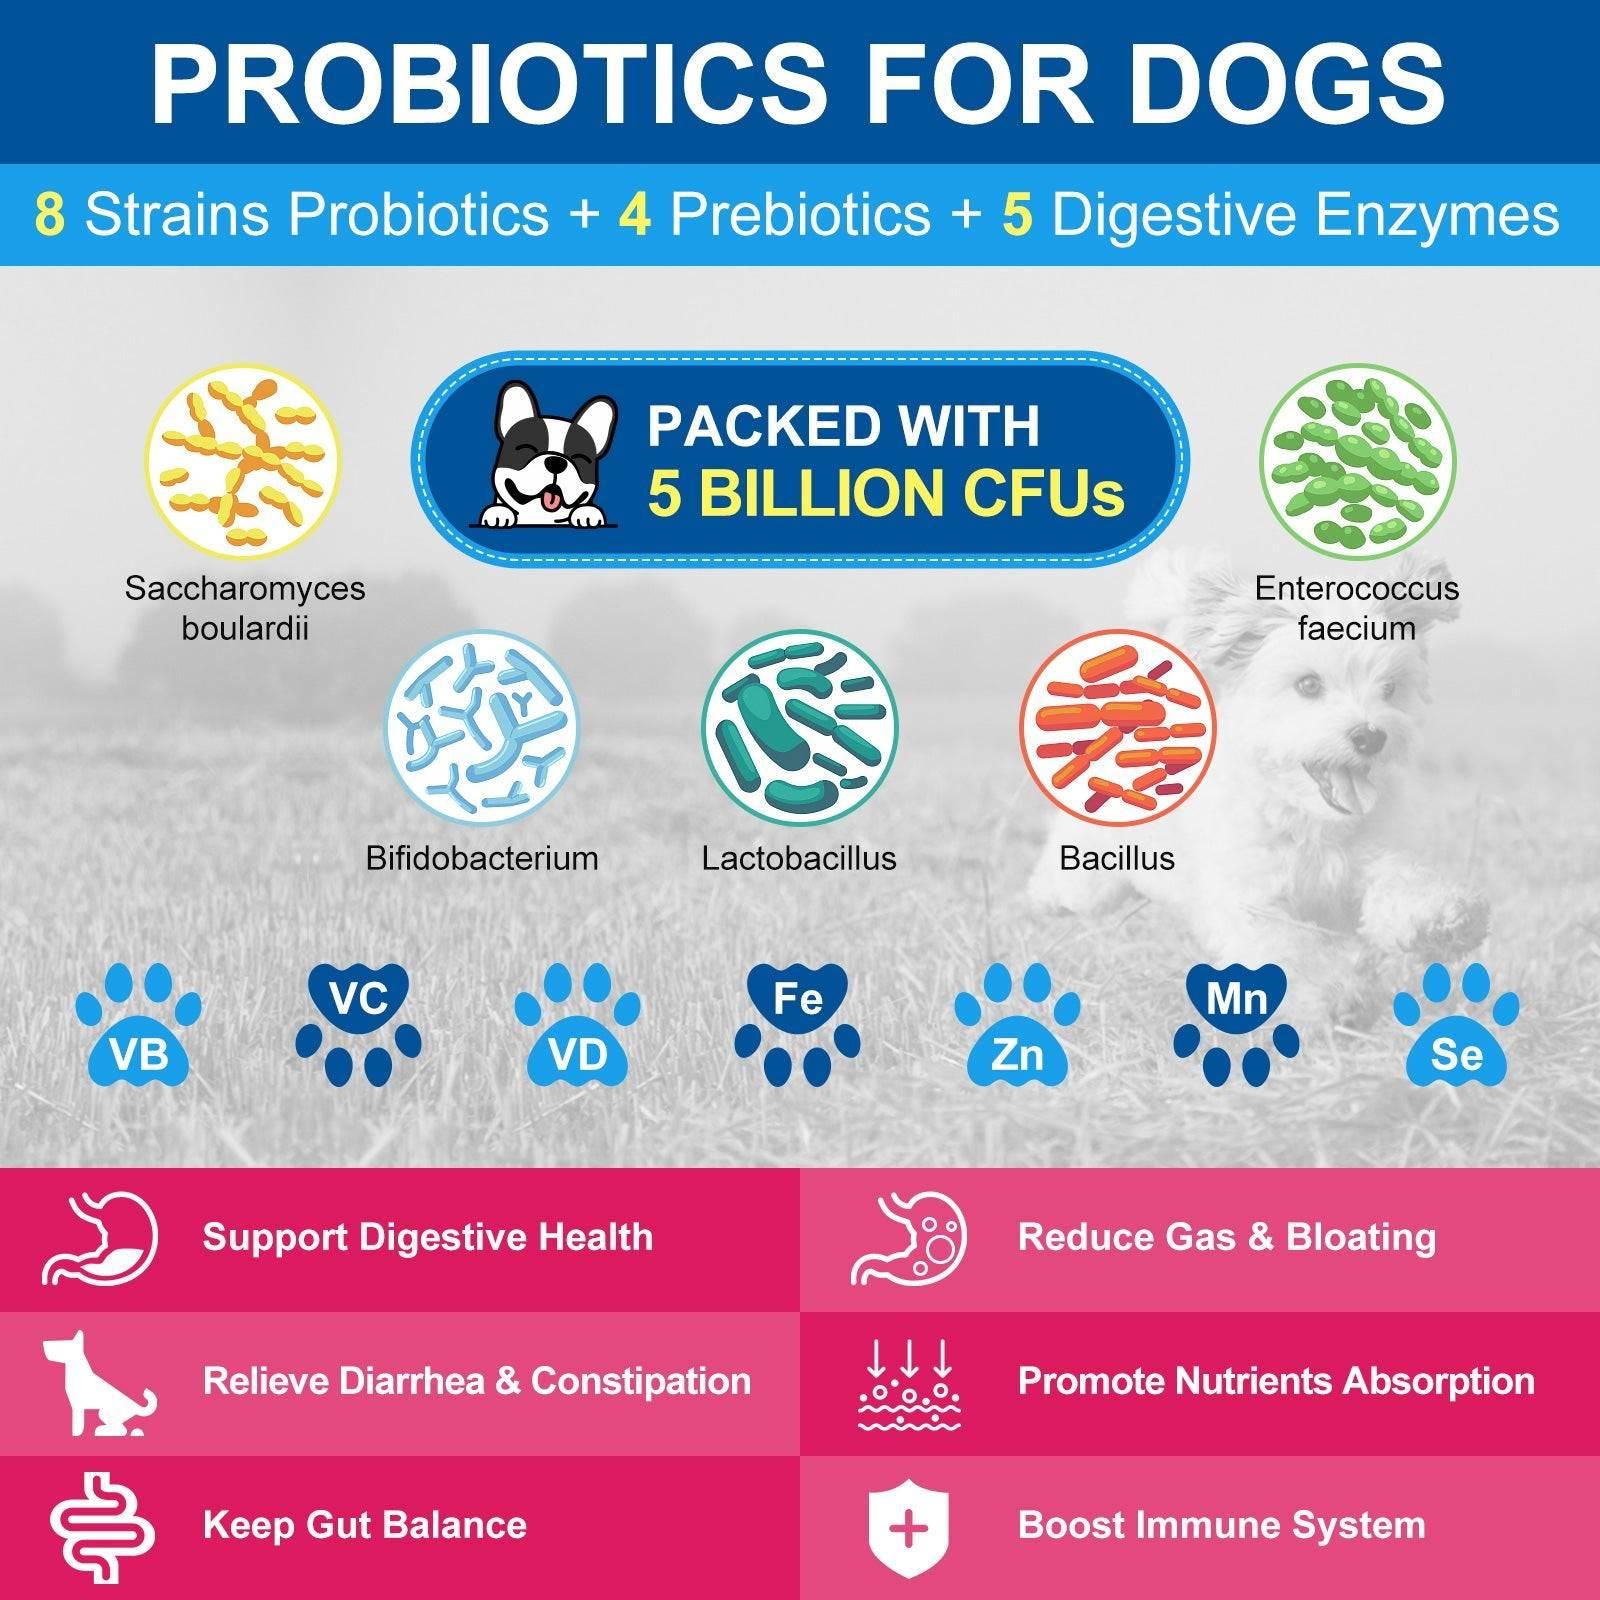 PROBIOTICS FOR DOGS